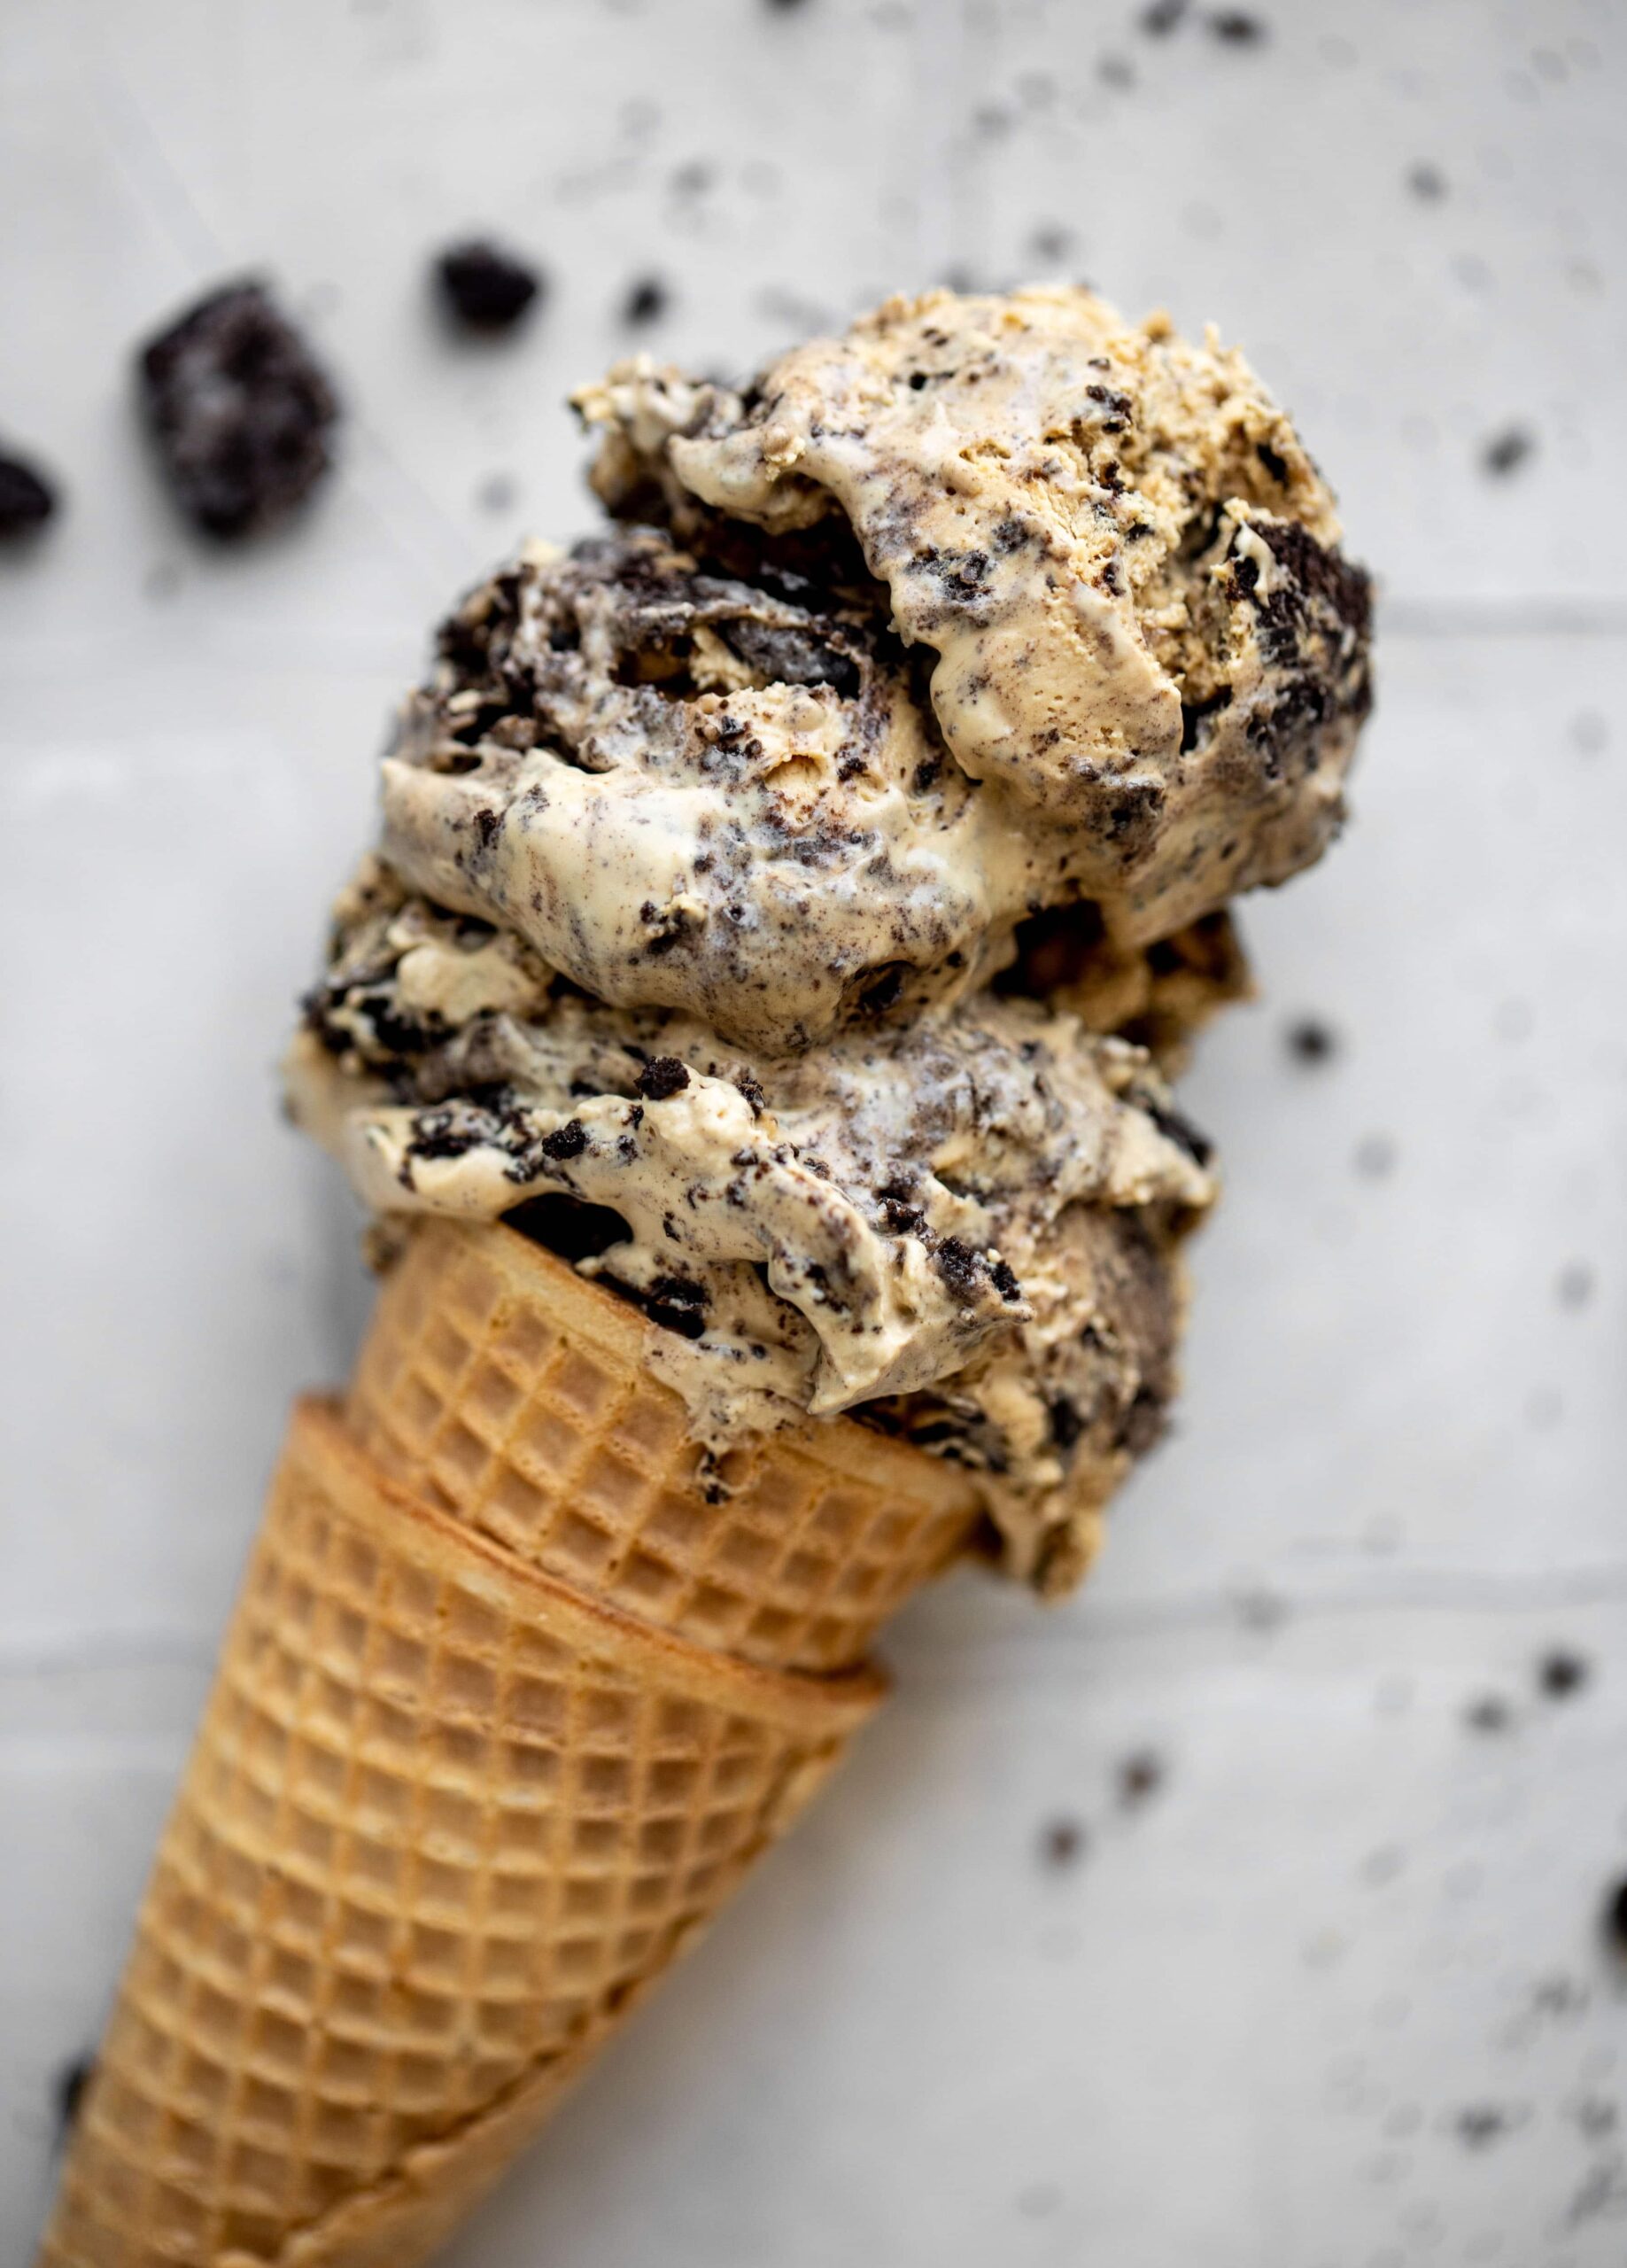  Meet your new favorite ice cream flavor: Coffee Oreo Cookie Rum Ice Cream.